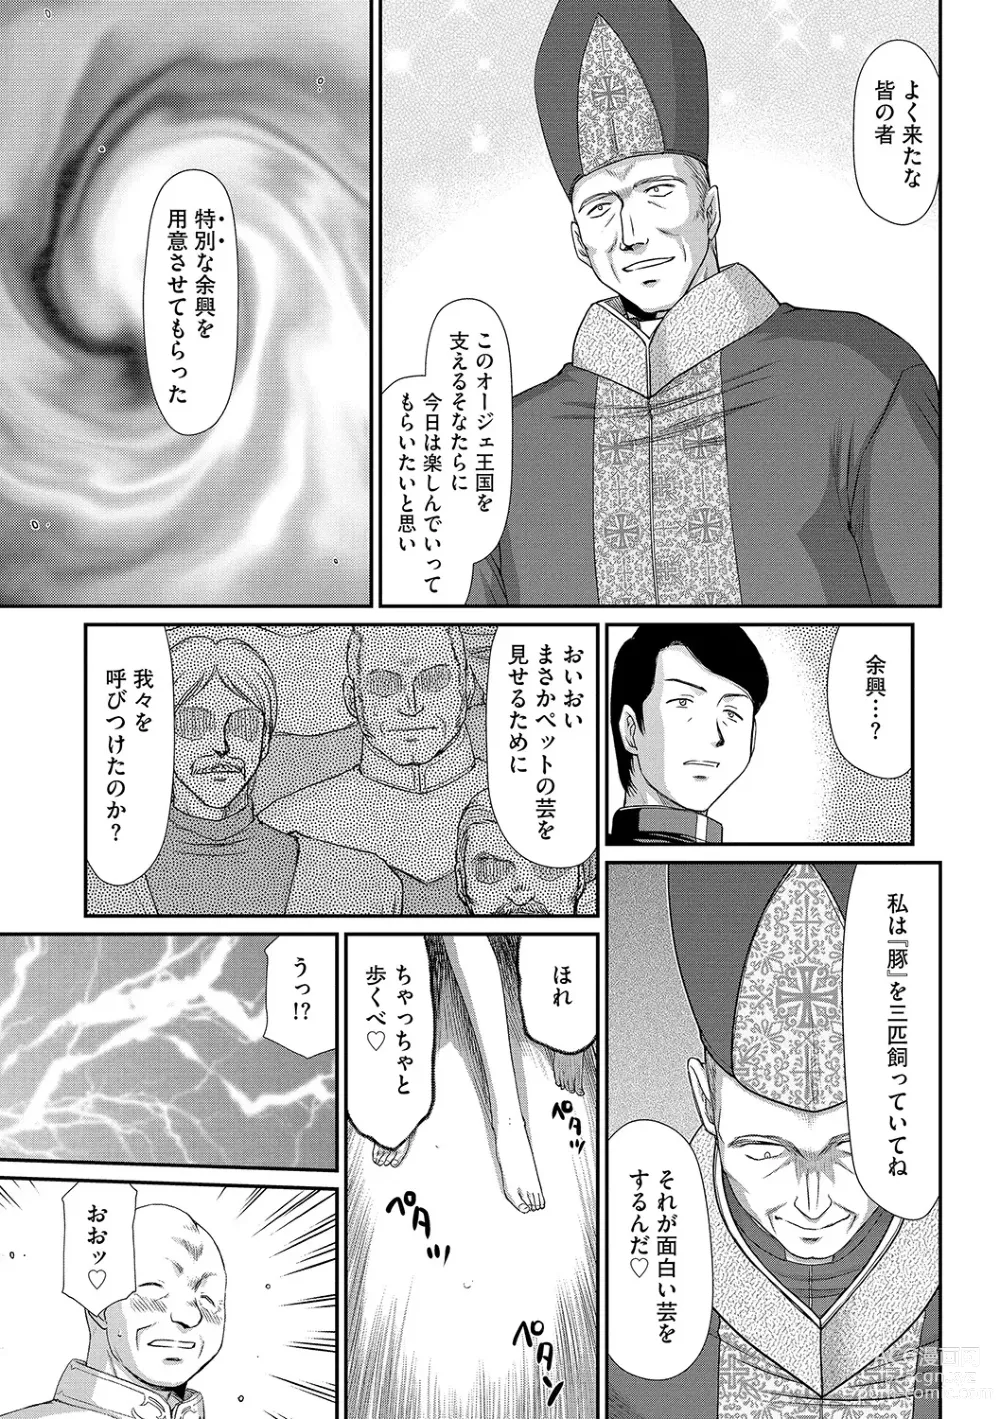 Page 181 of manga Hakudaku Senki Eleanor